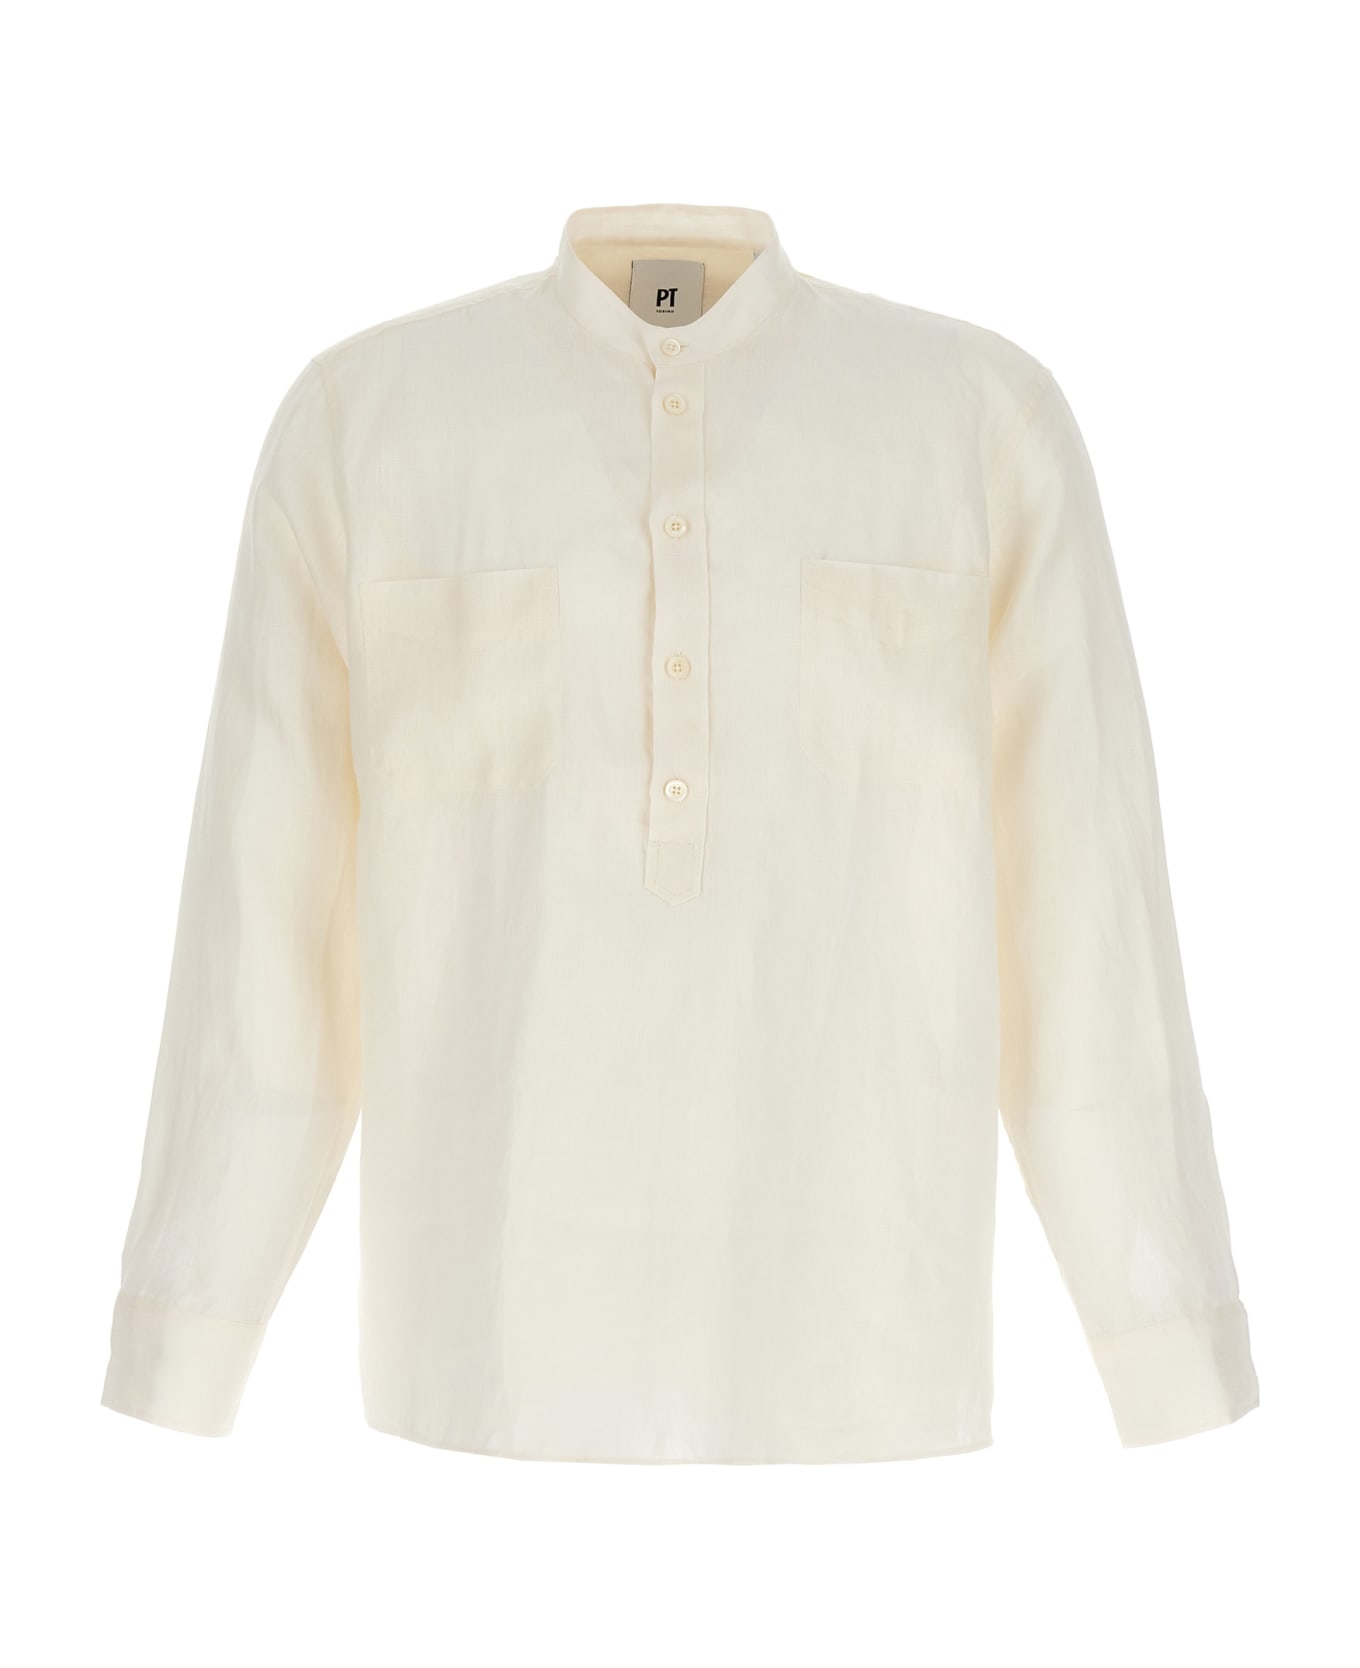 PT Torino Linen Shirt - White